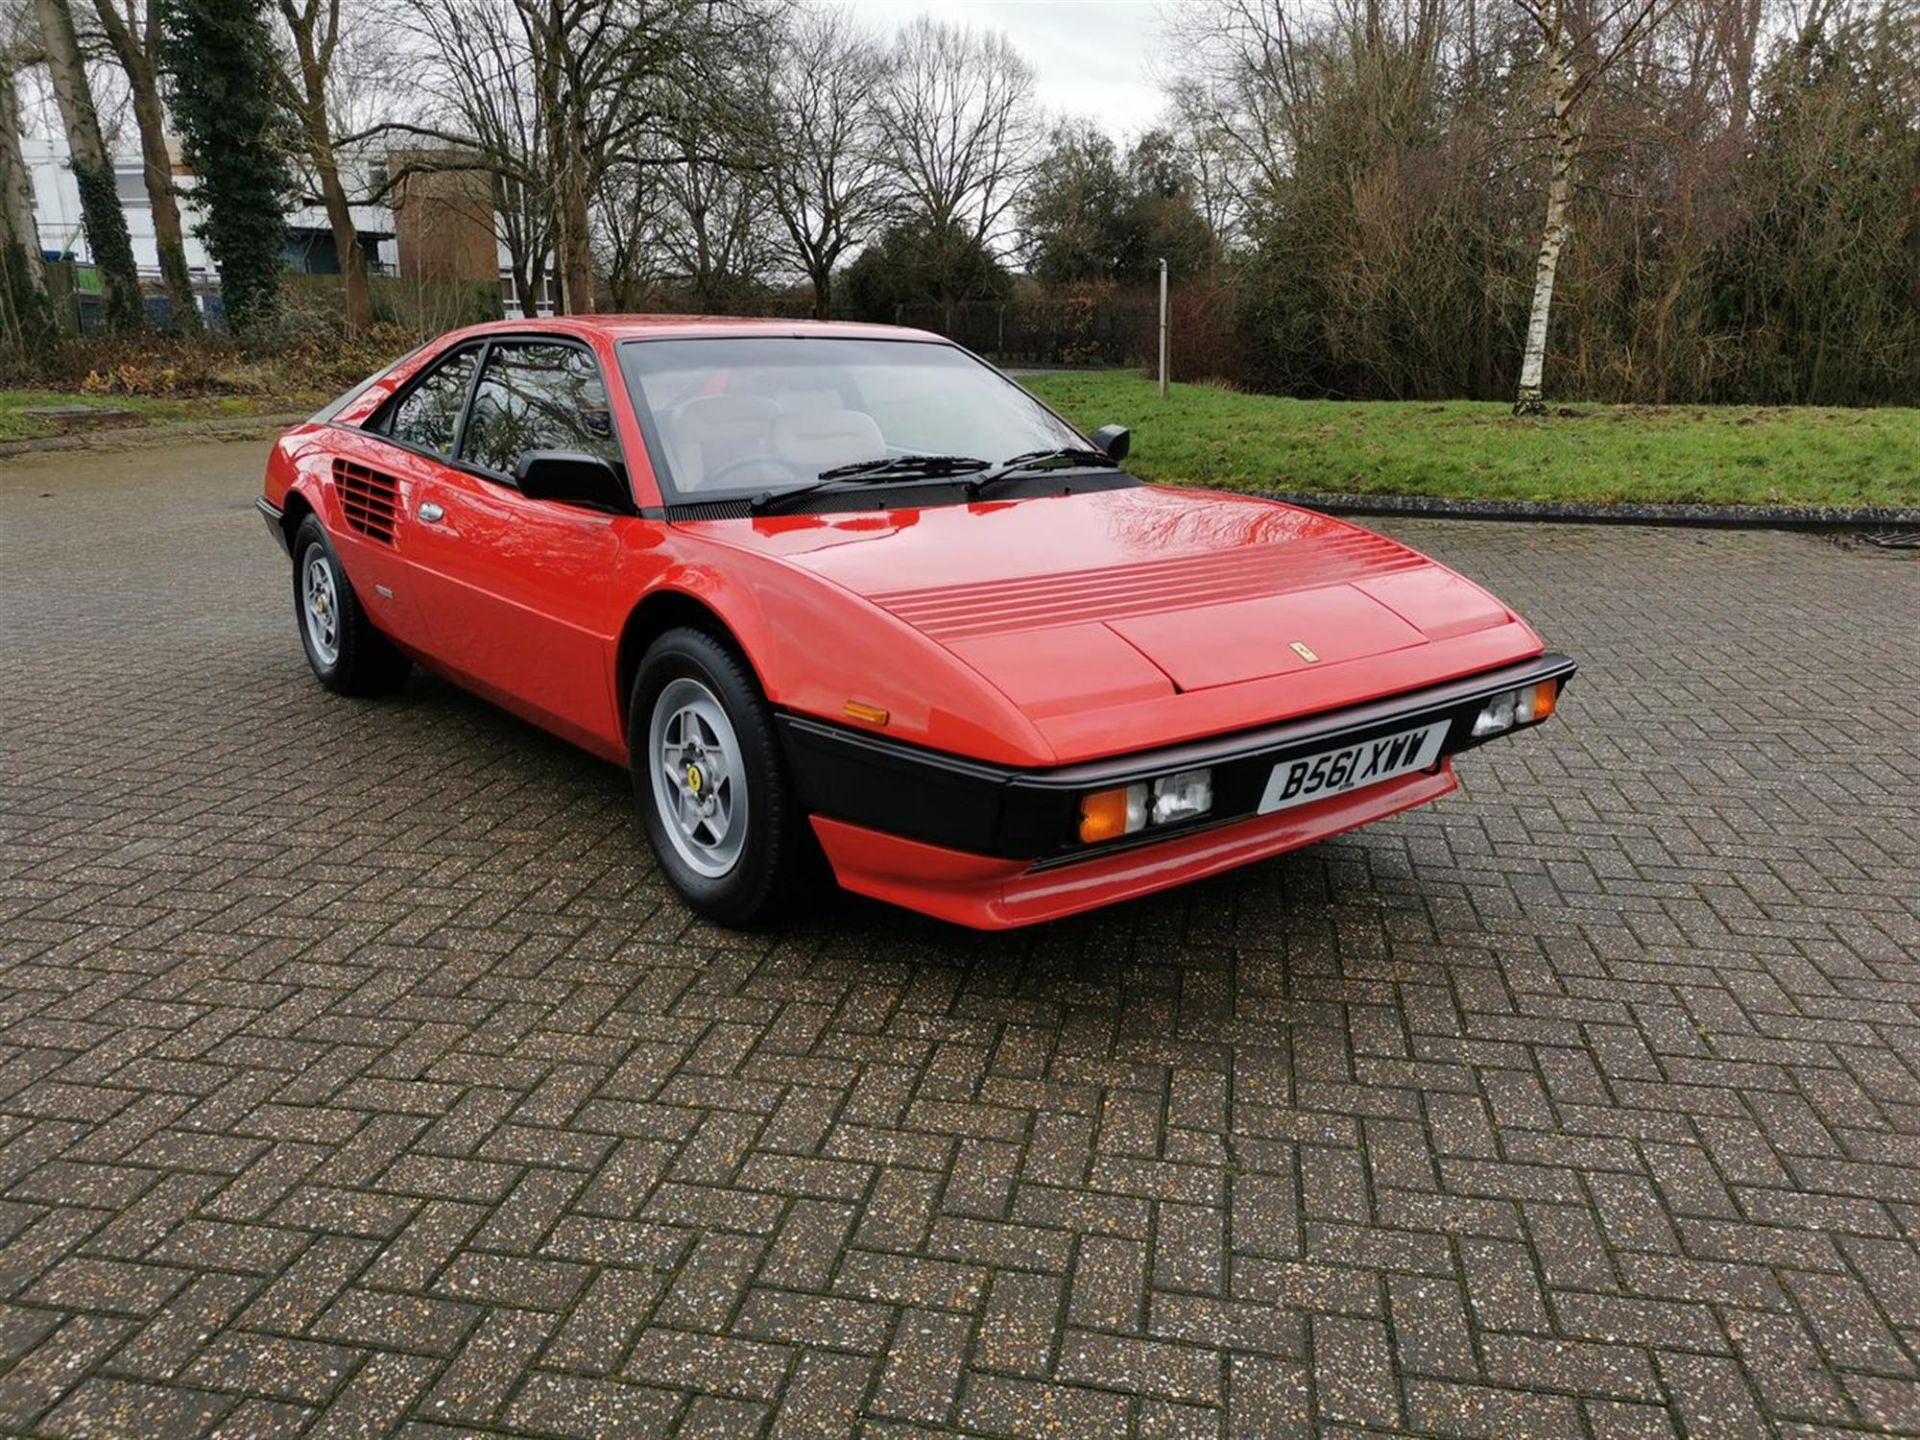 1985 Ferrari Mondial 3.0 Quattrovalvole - Image 2 of 2